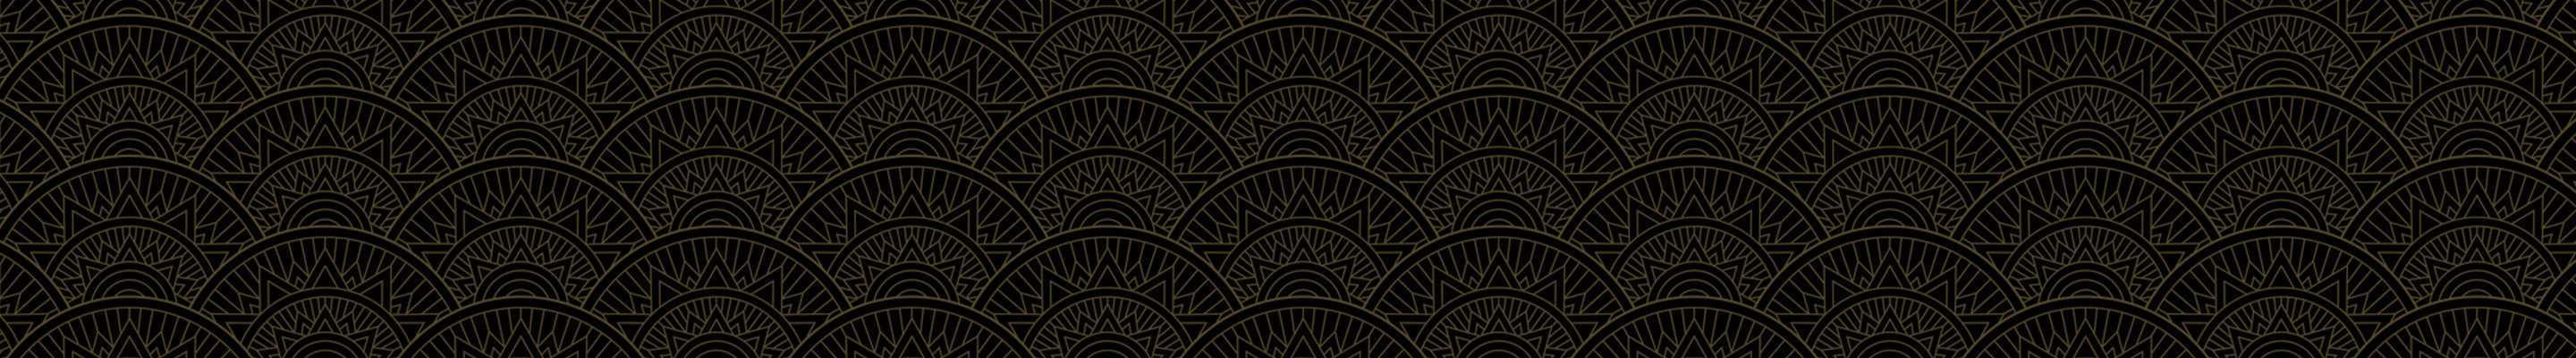 Gold deco pattern over a dark background